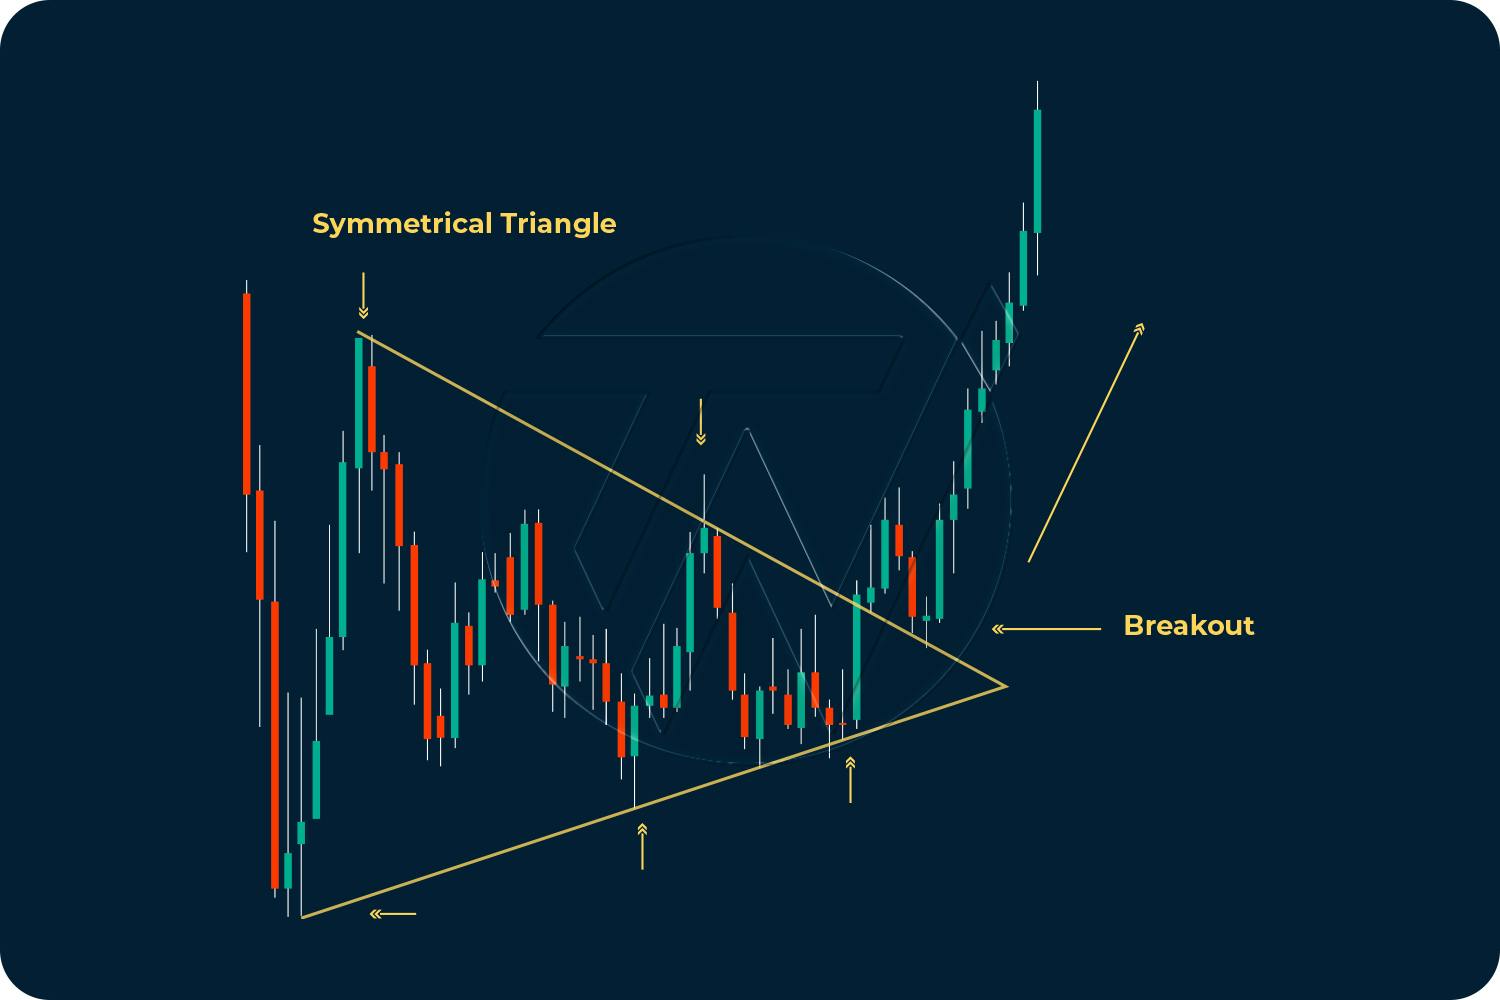 Candlestick chart patterns illustrating symmetrical triangle breakout